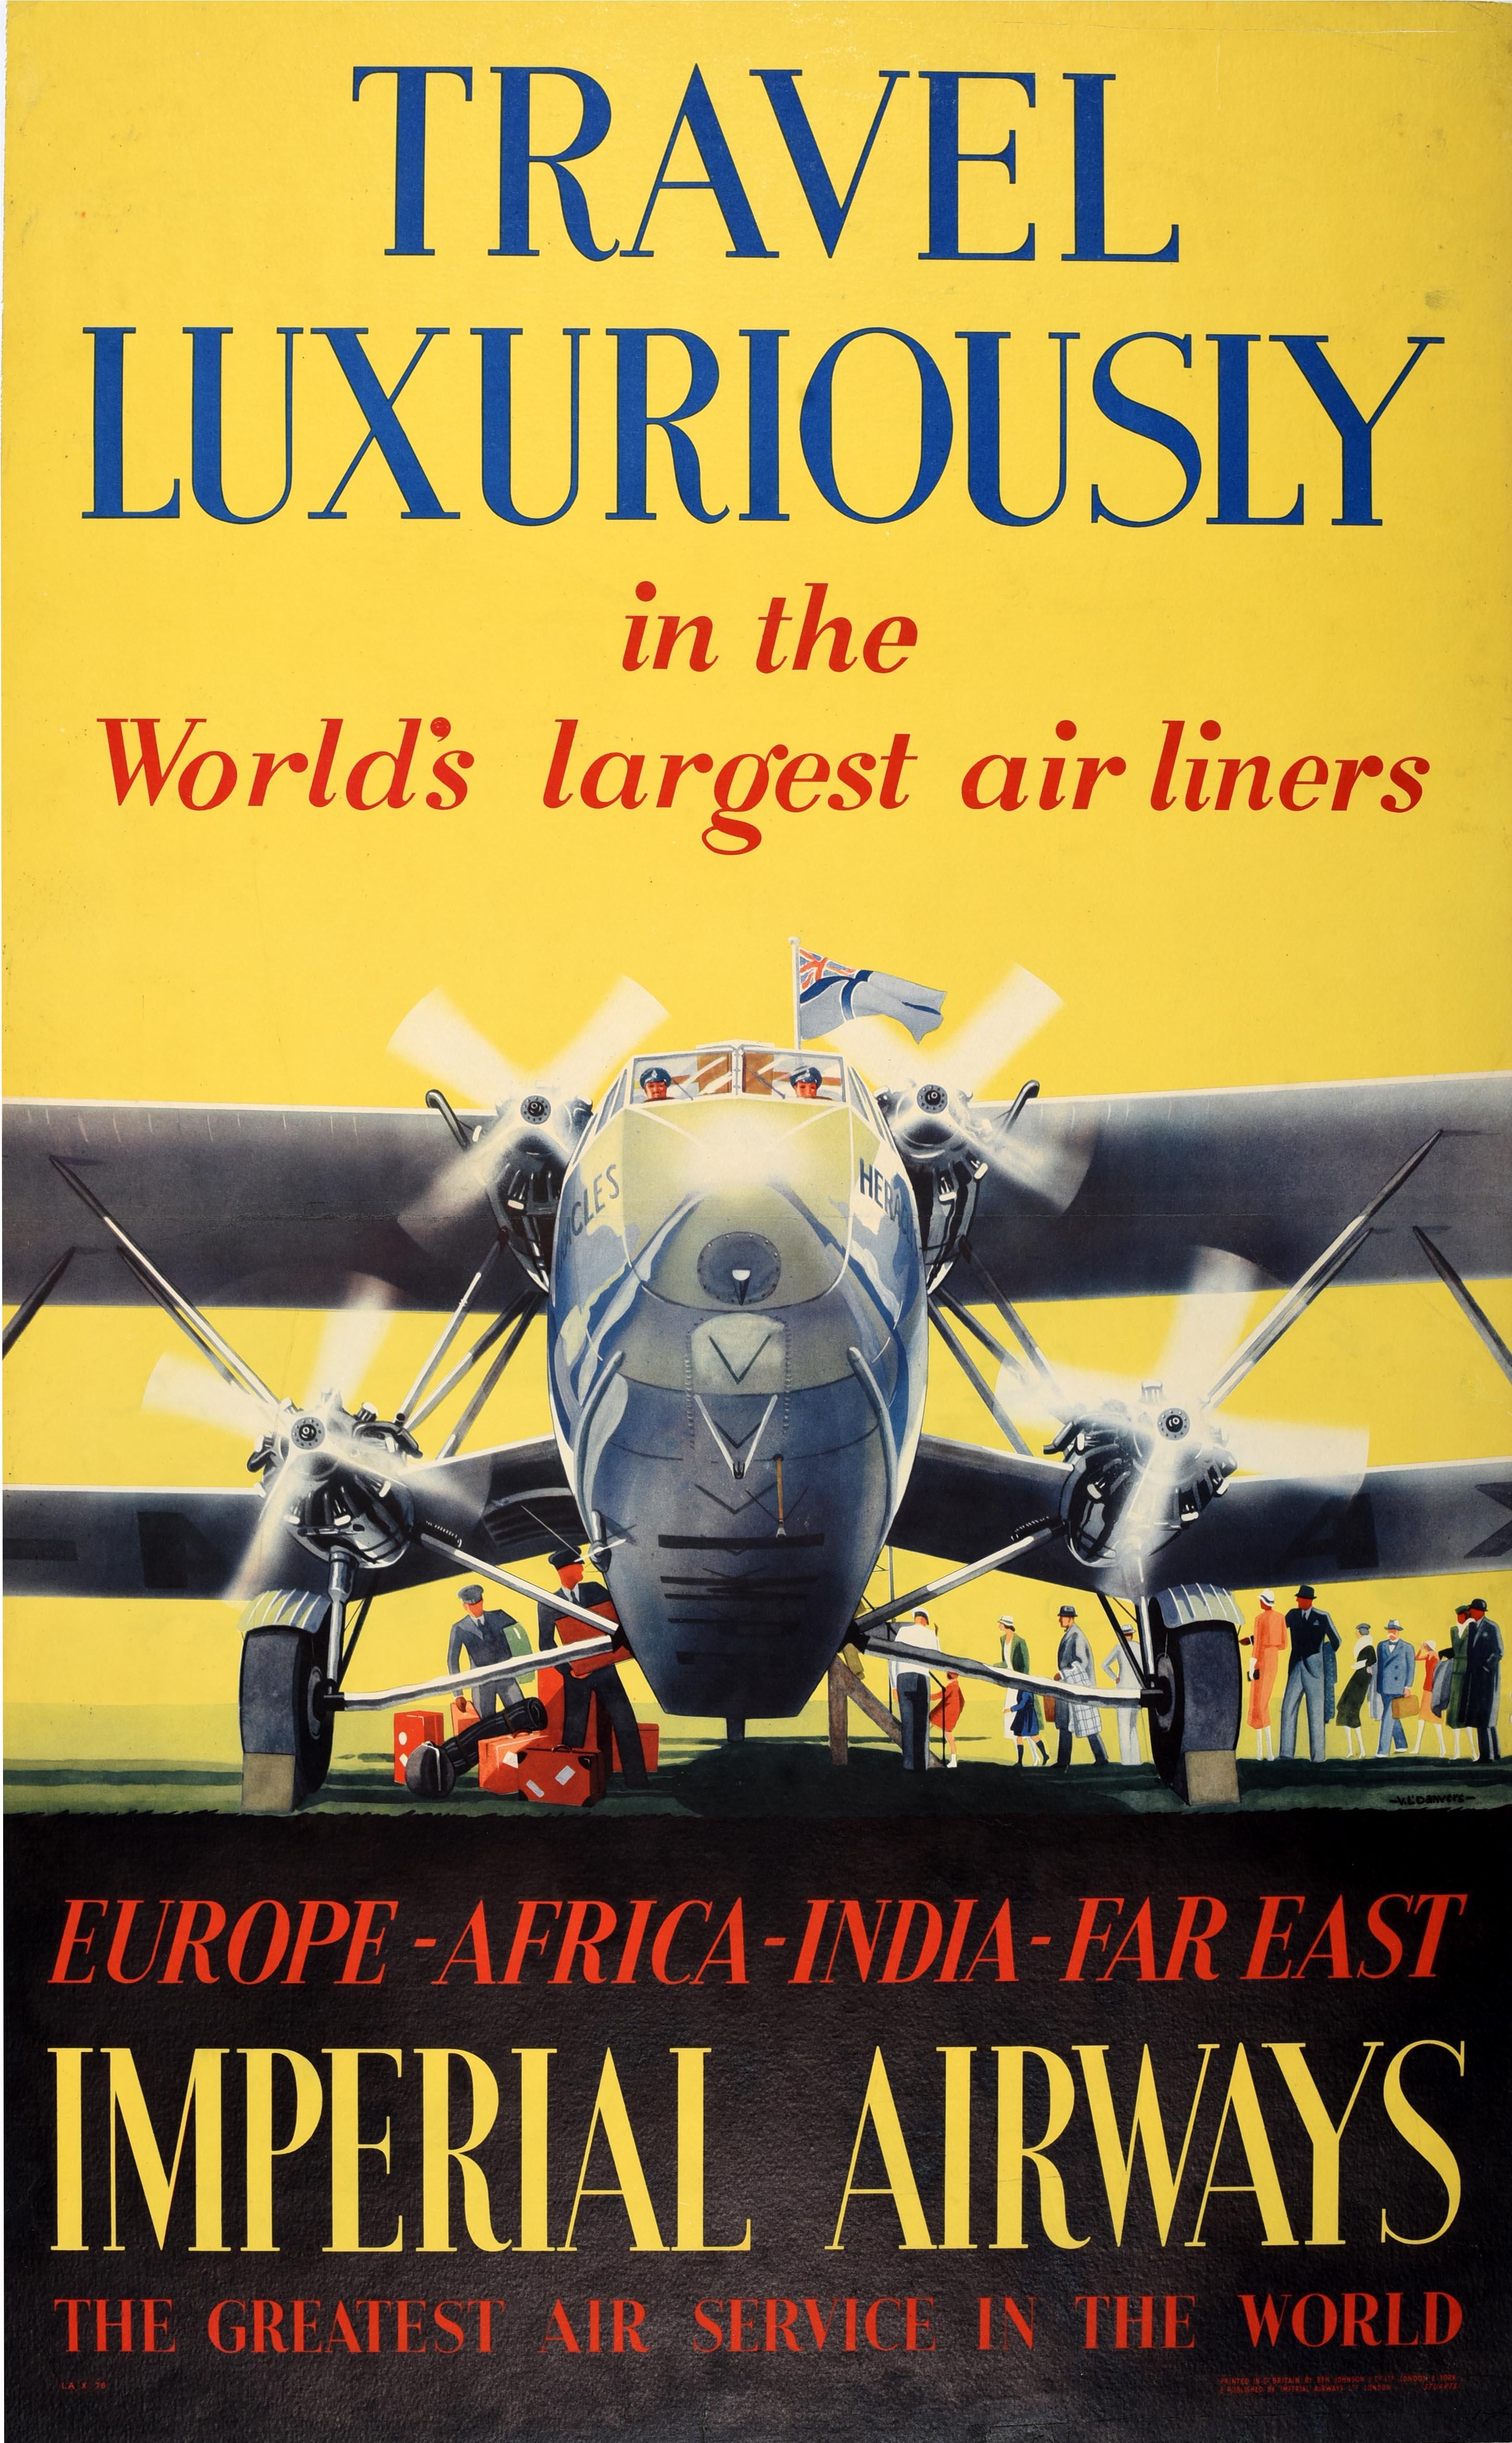 Verney L. Danvers Print - Original Vintage Travel Poster Imperial Airways Travel Luxuriously Heracles